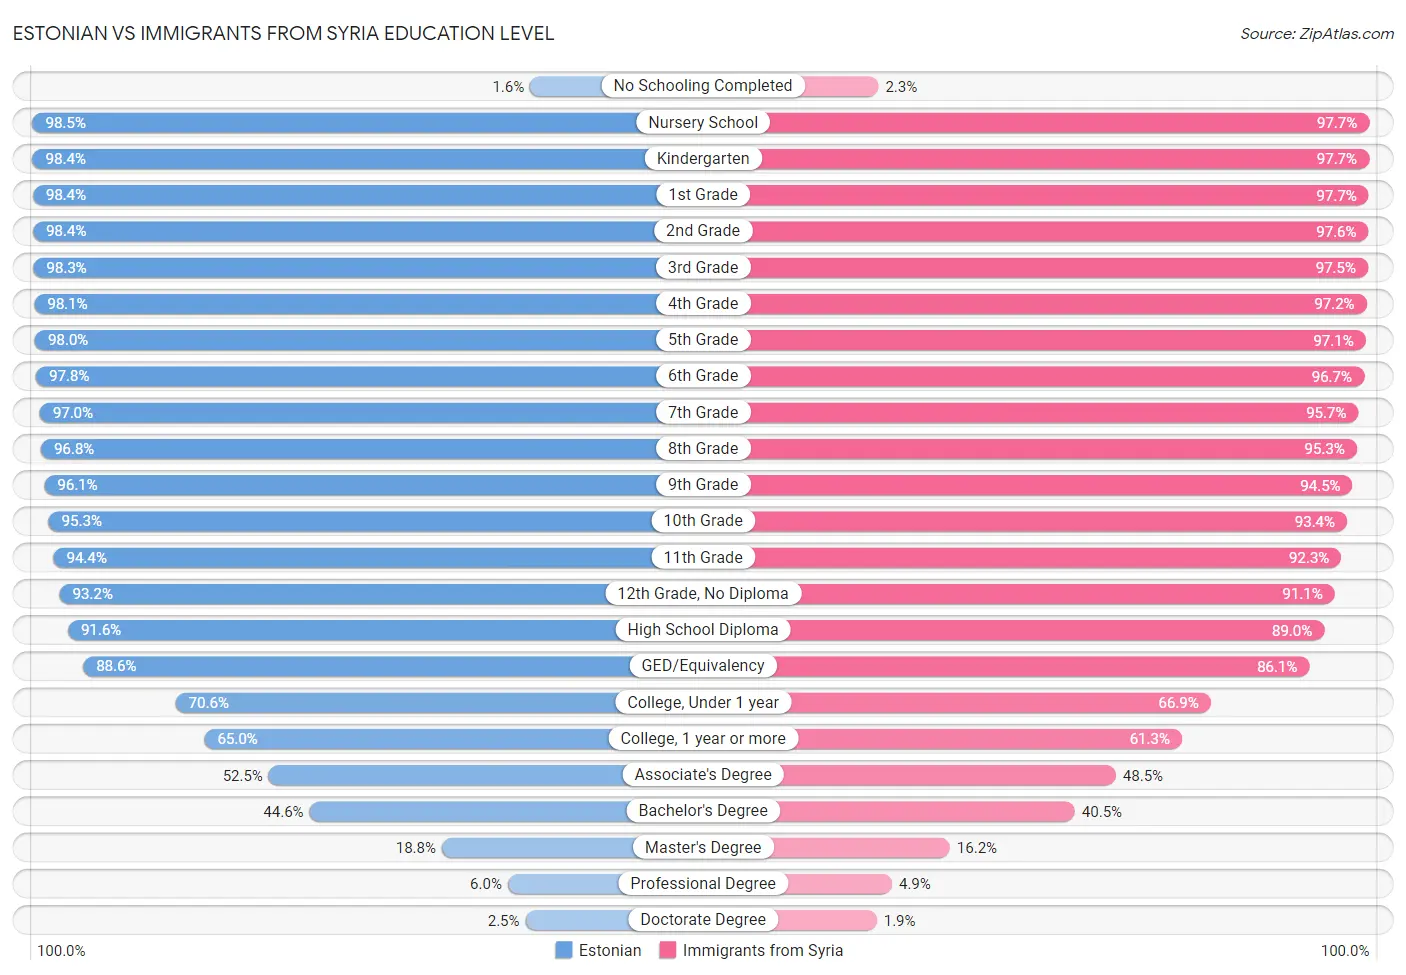 Estonian vs Immigrants from Syria Education Level